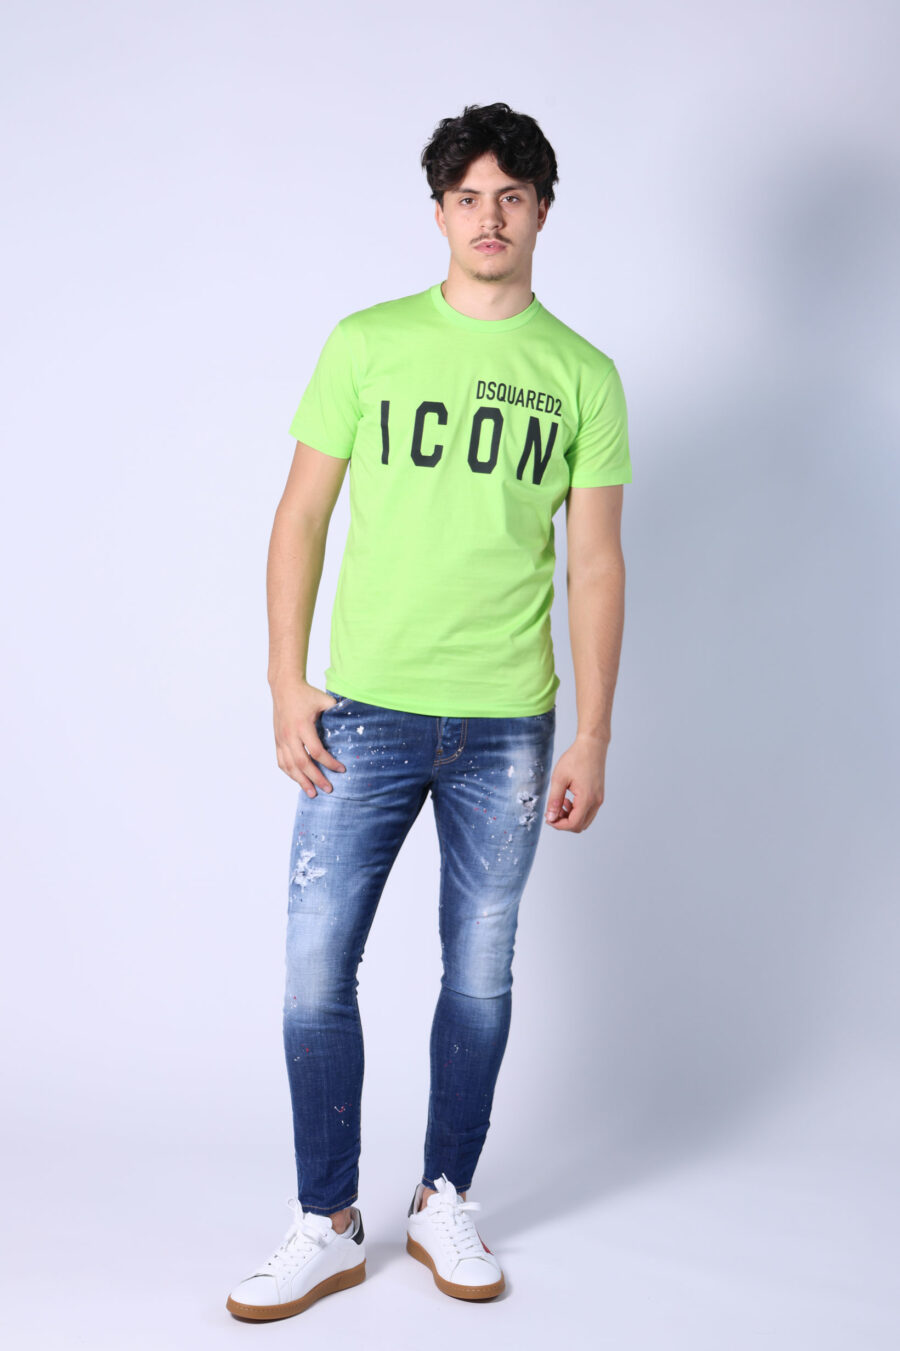 T-shirt vert citron avec maxilogo "icon" noir - Untitled Catalog 05394